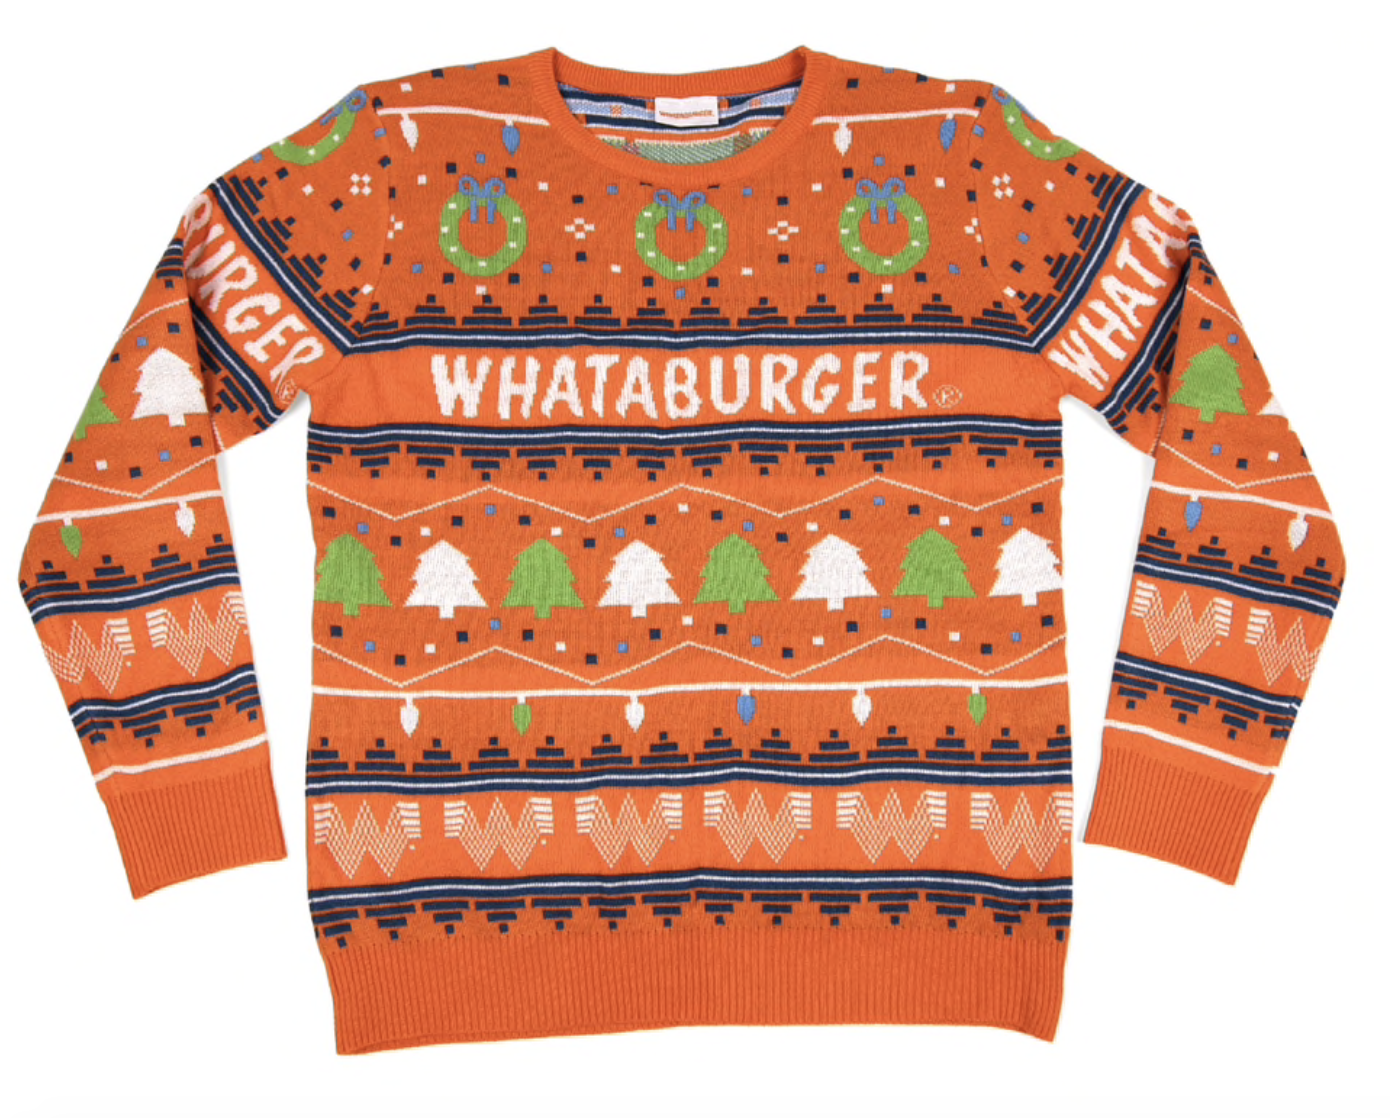 Christmas Sweater 2020